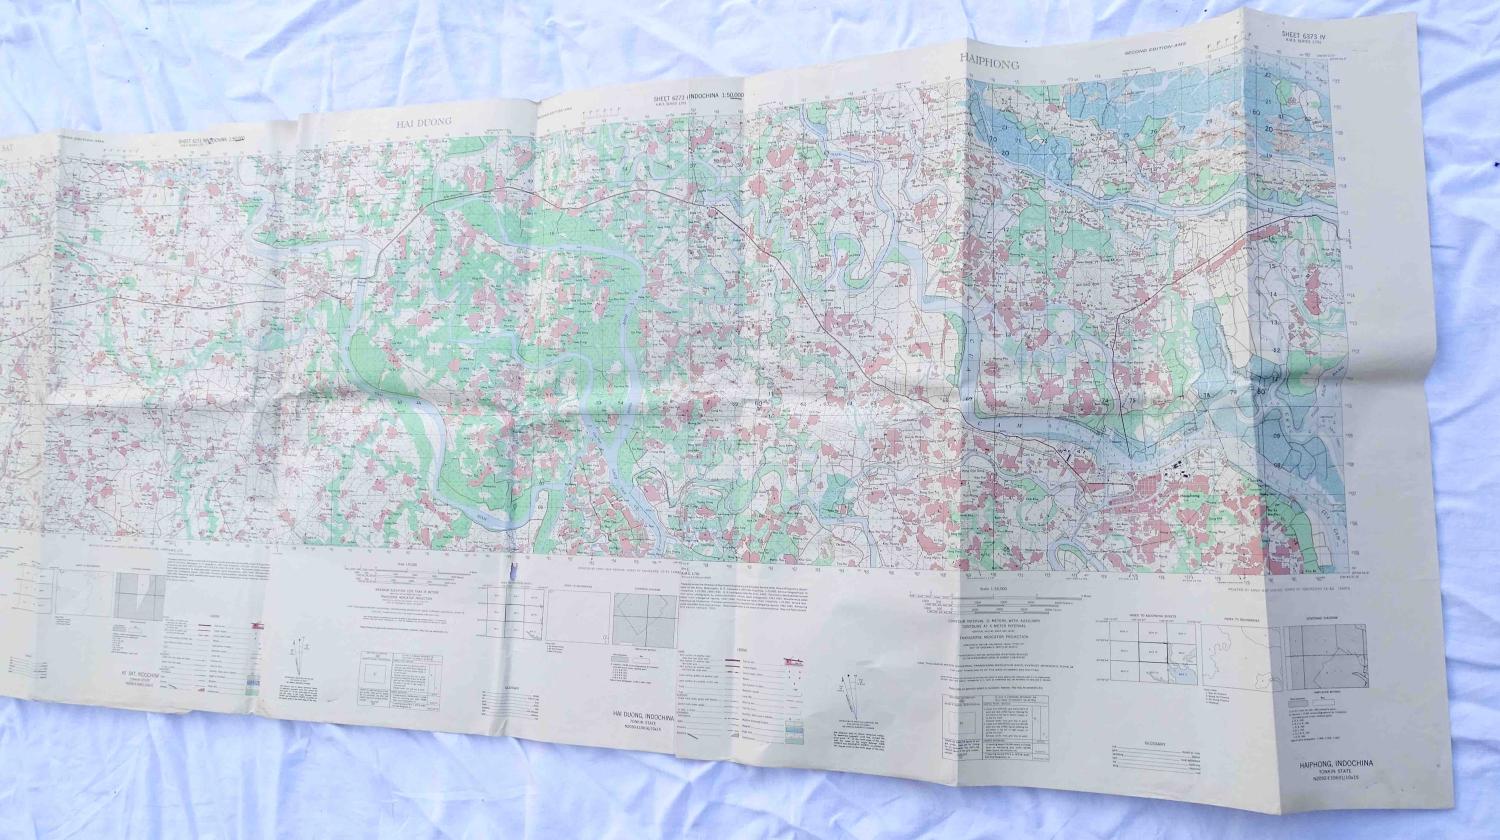 Lot de 4 cartes du Tonkin Haiphong, fleuve rouge Indochine  1:50.000   U.S. Army map service 1952